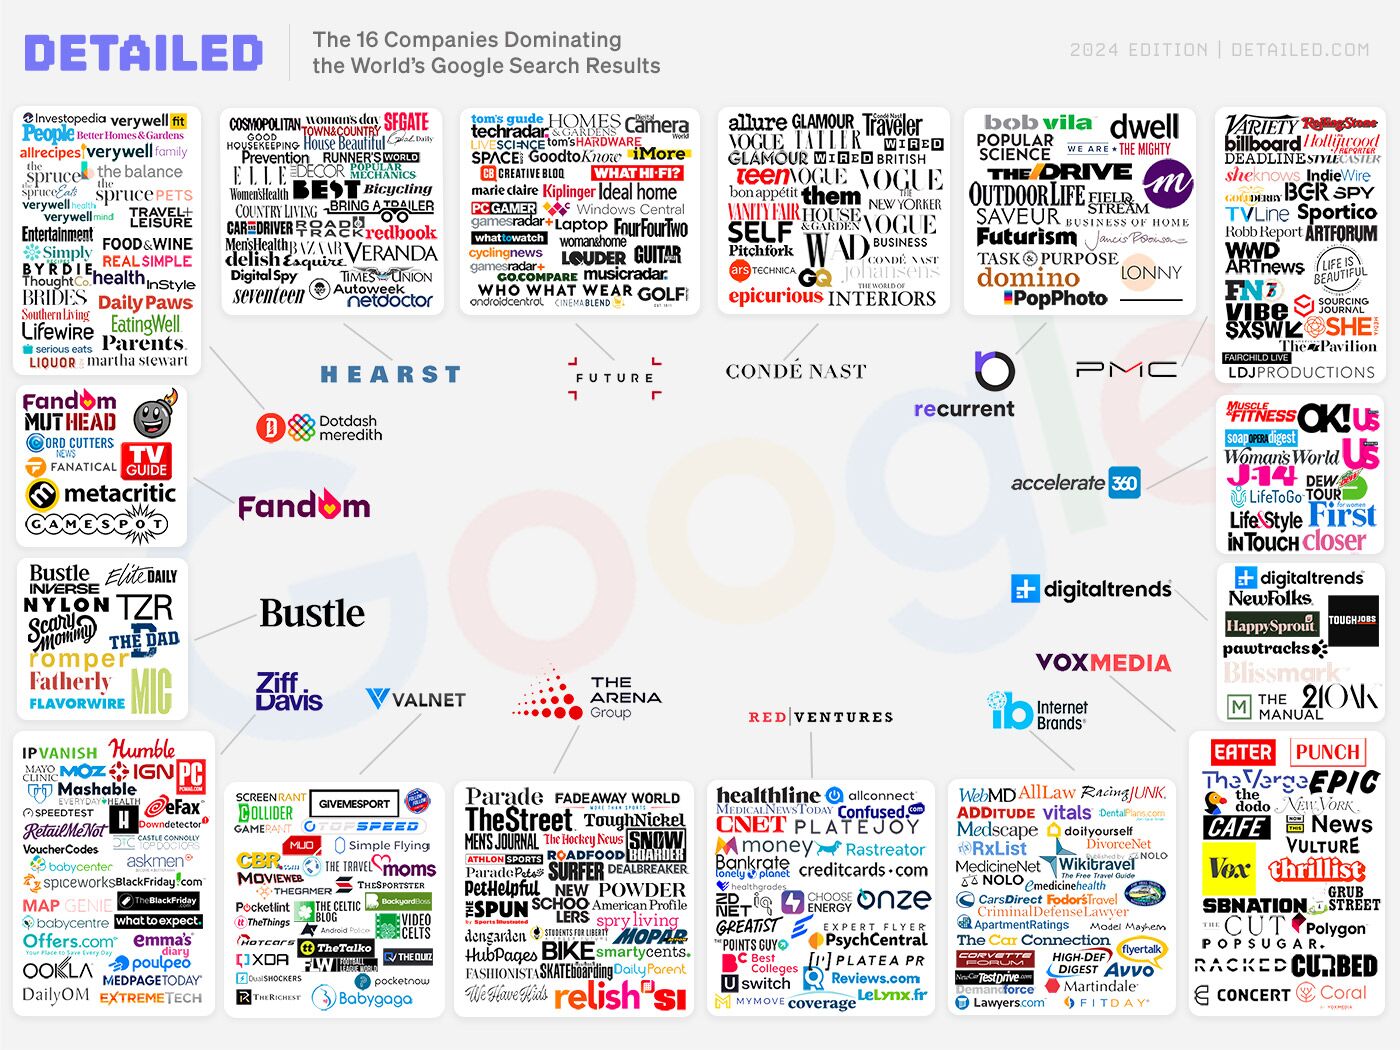 16 companies get 3.5 billion monthly clicks from Google across 588 brands